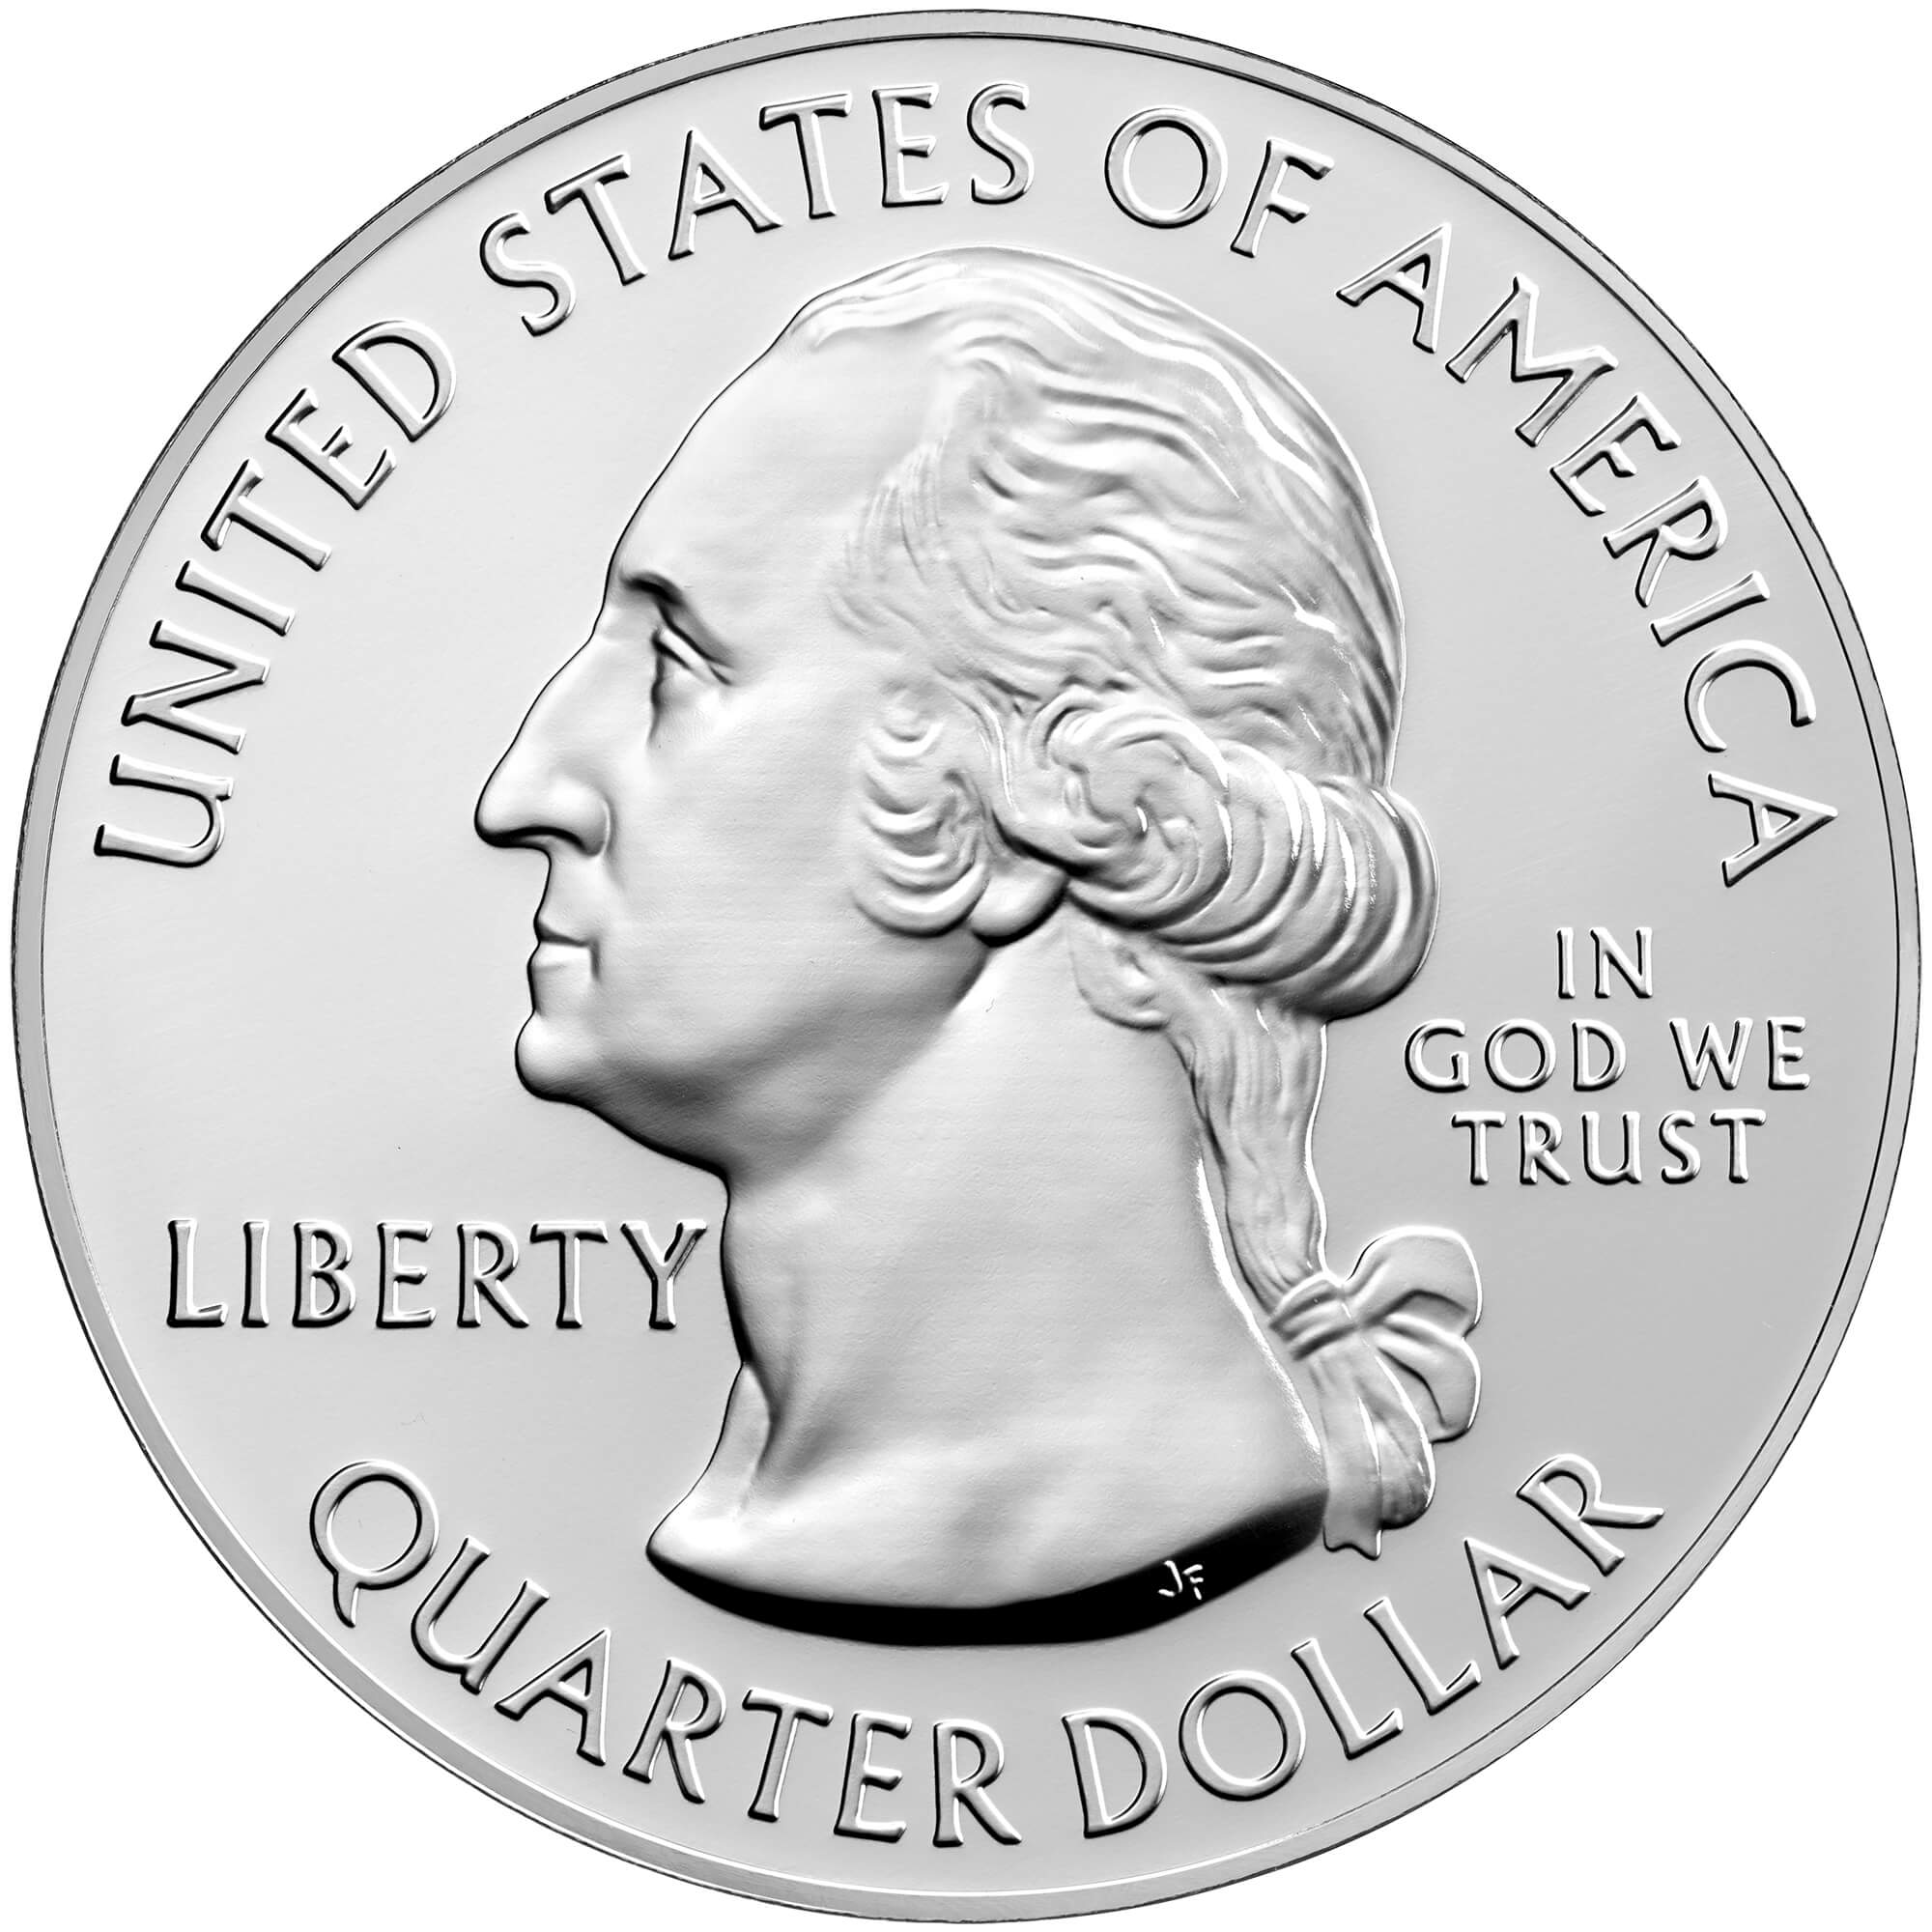 US 1/4 Dollar - Quarter 2010 no mintmark